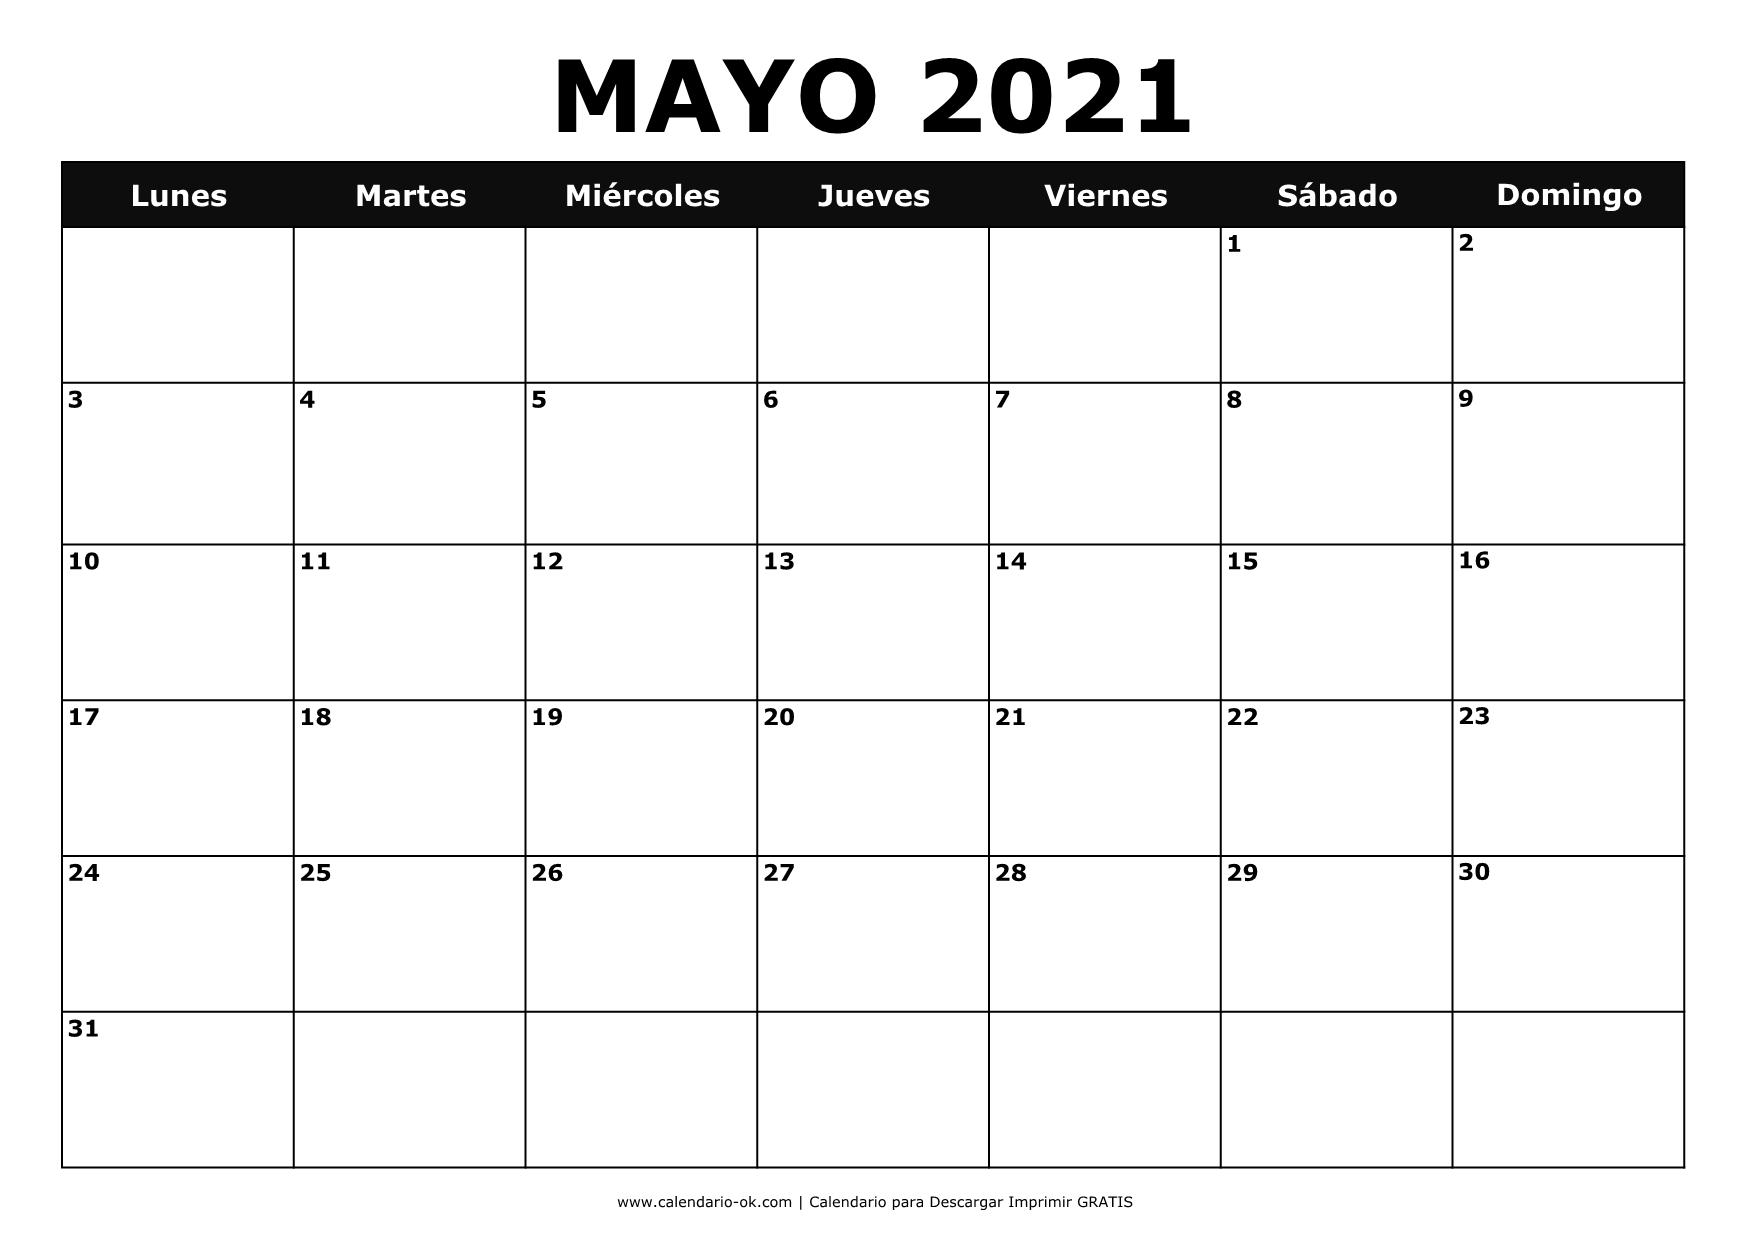 MAYO 2021 BLANCO y NEGRO